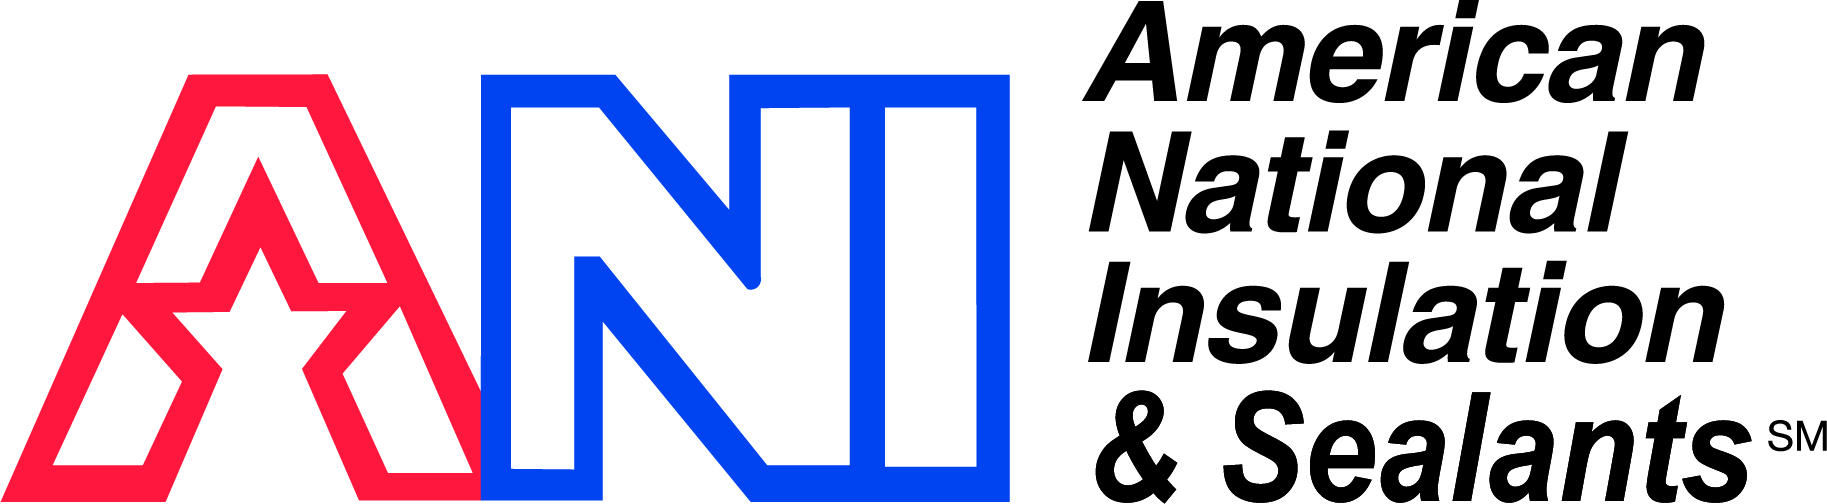 American National Insulation & Sealants Logo